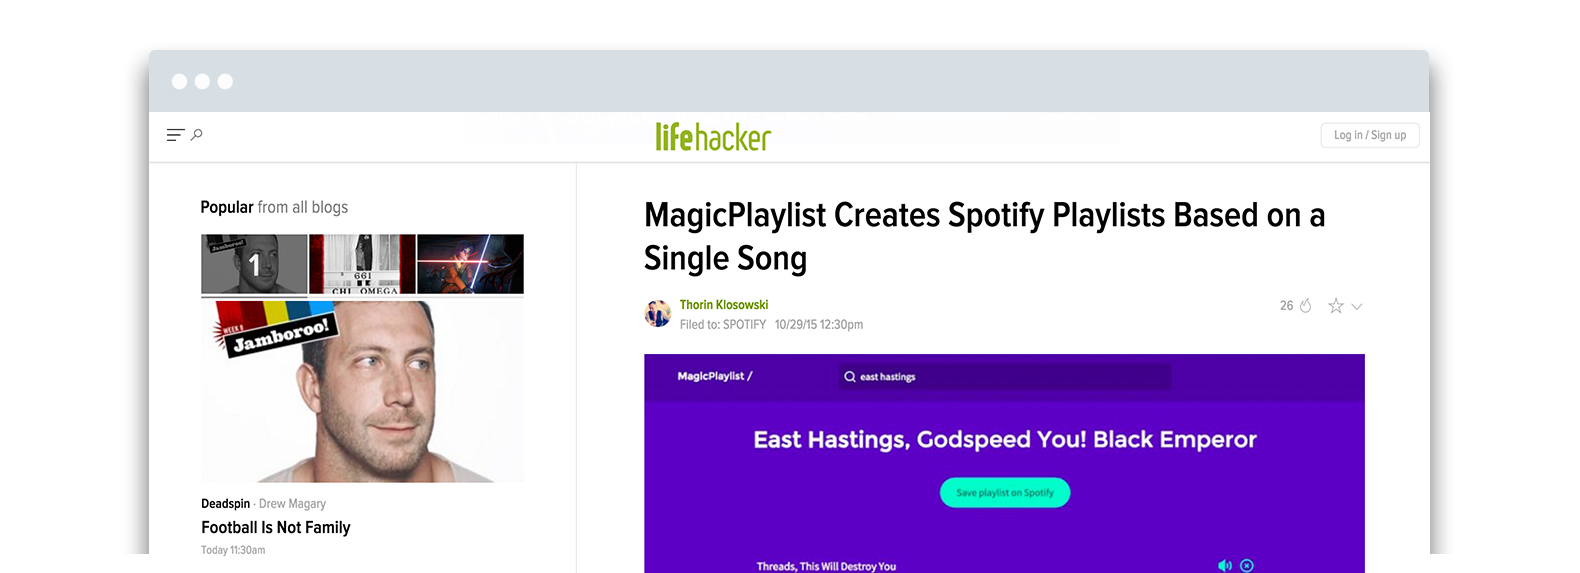 MagicPlaylist Creates Spotify Playlists Based on a Single Song